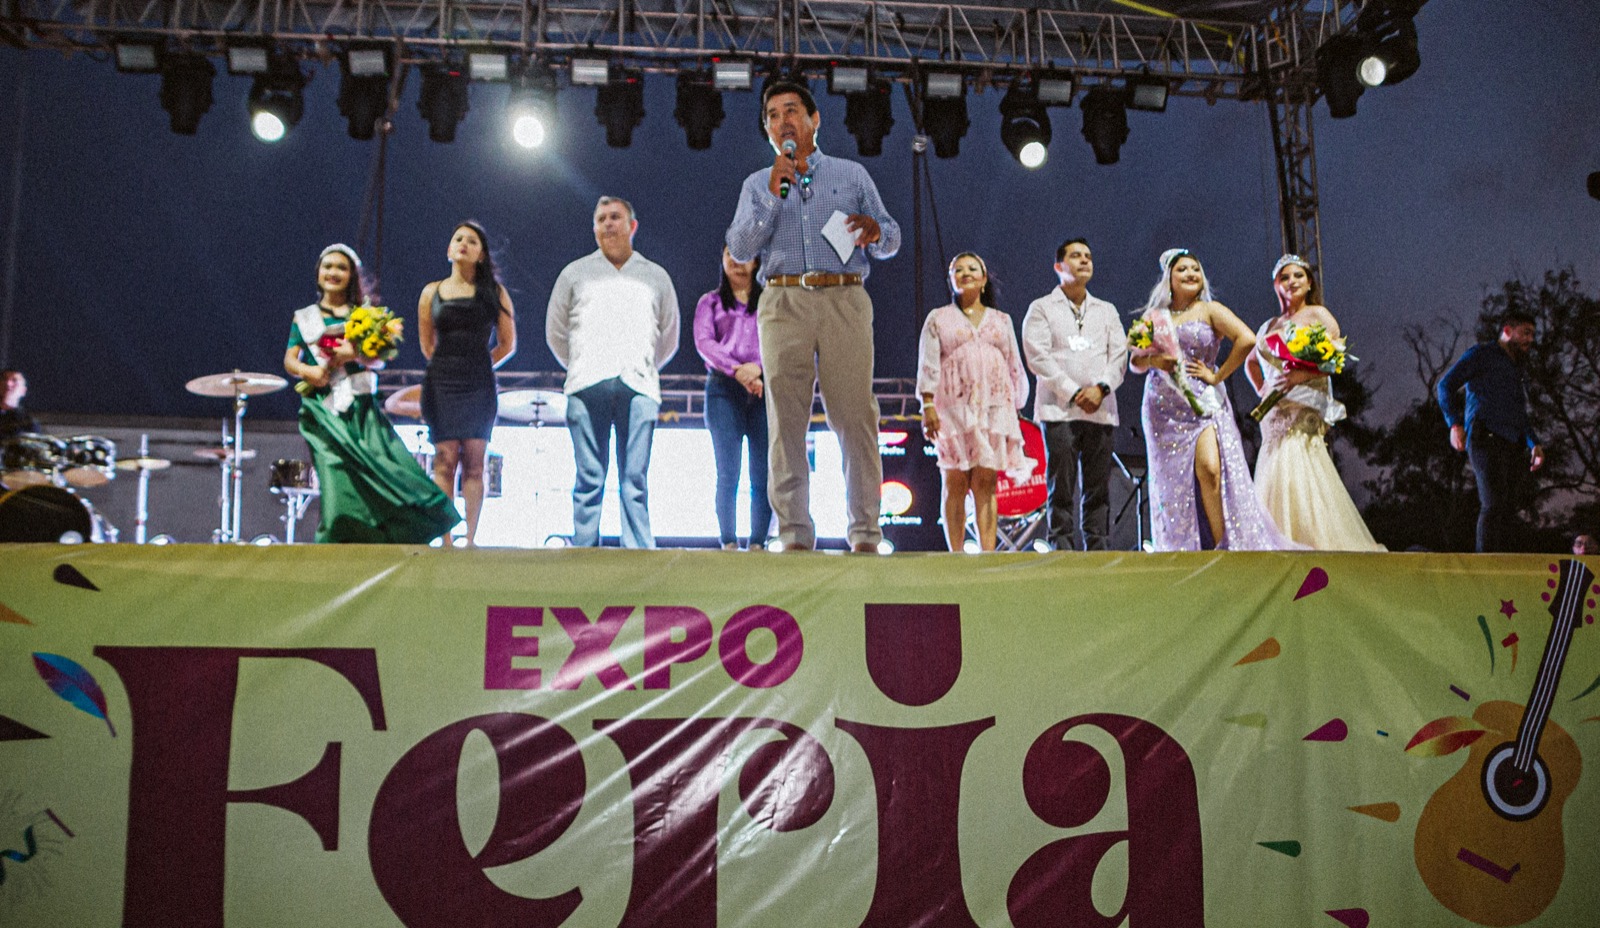 Abre Expo Feria Matamoros el próximo jueves, con presentación de